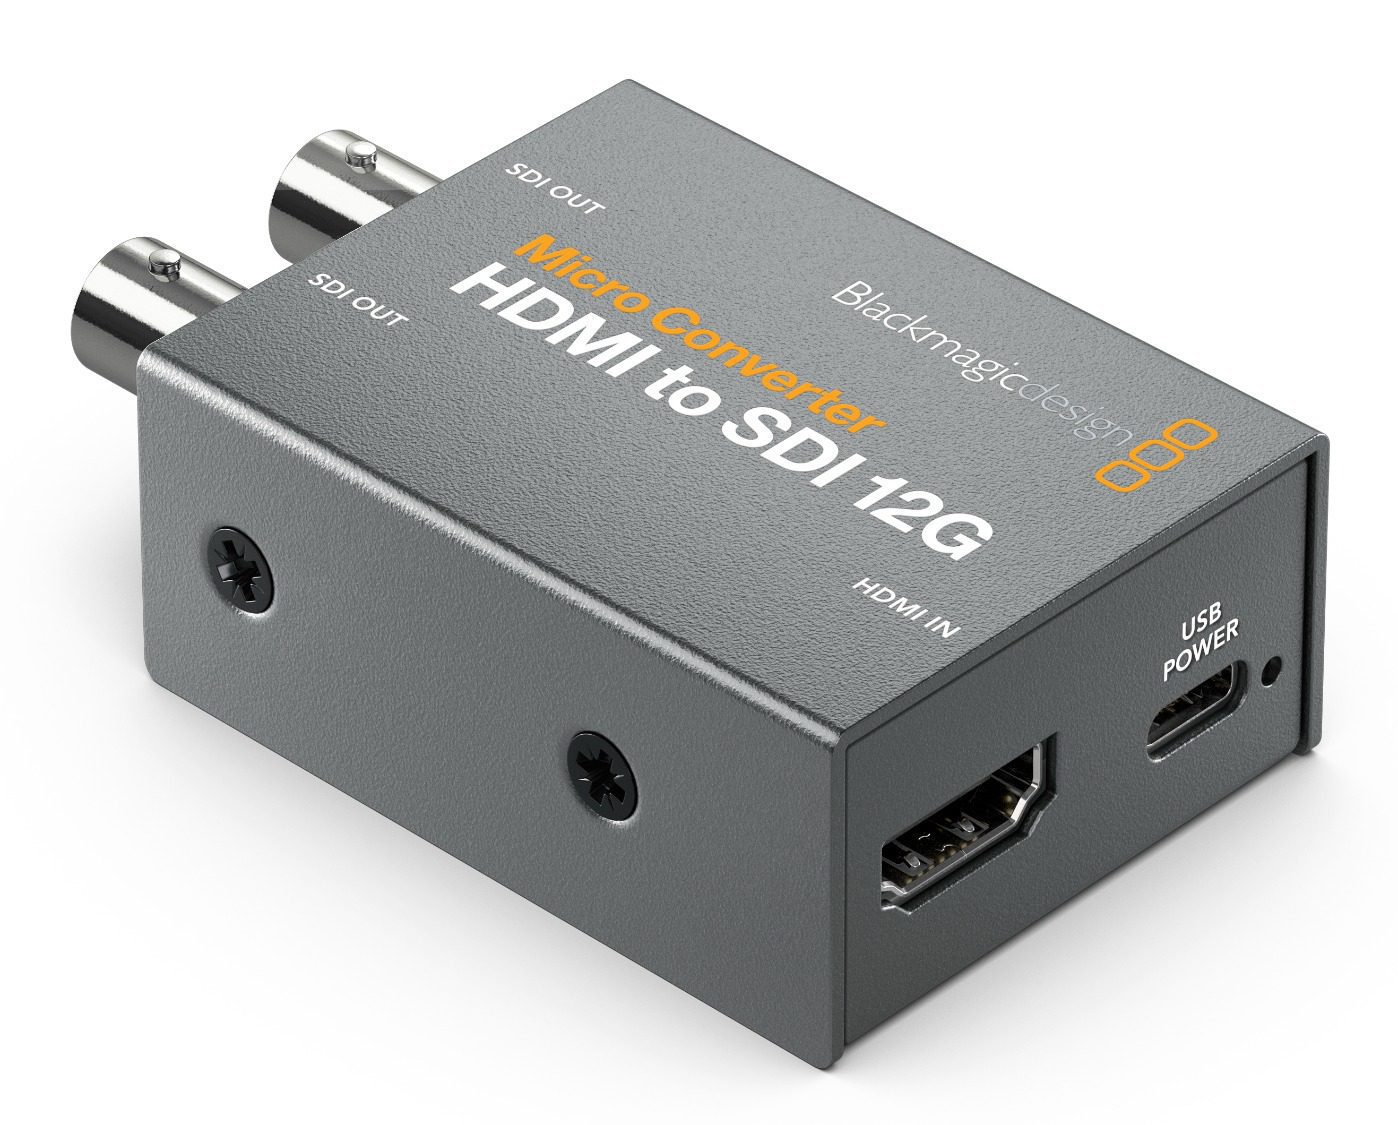 Blackmagic Micro Converter HDMI to SDI 12G PSU